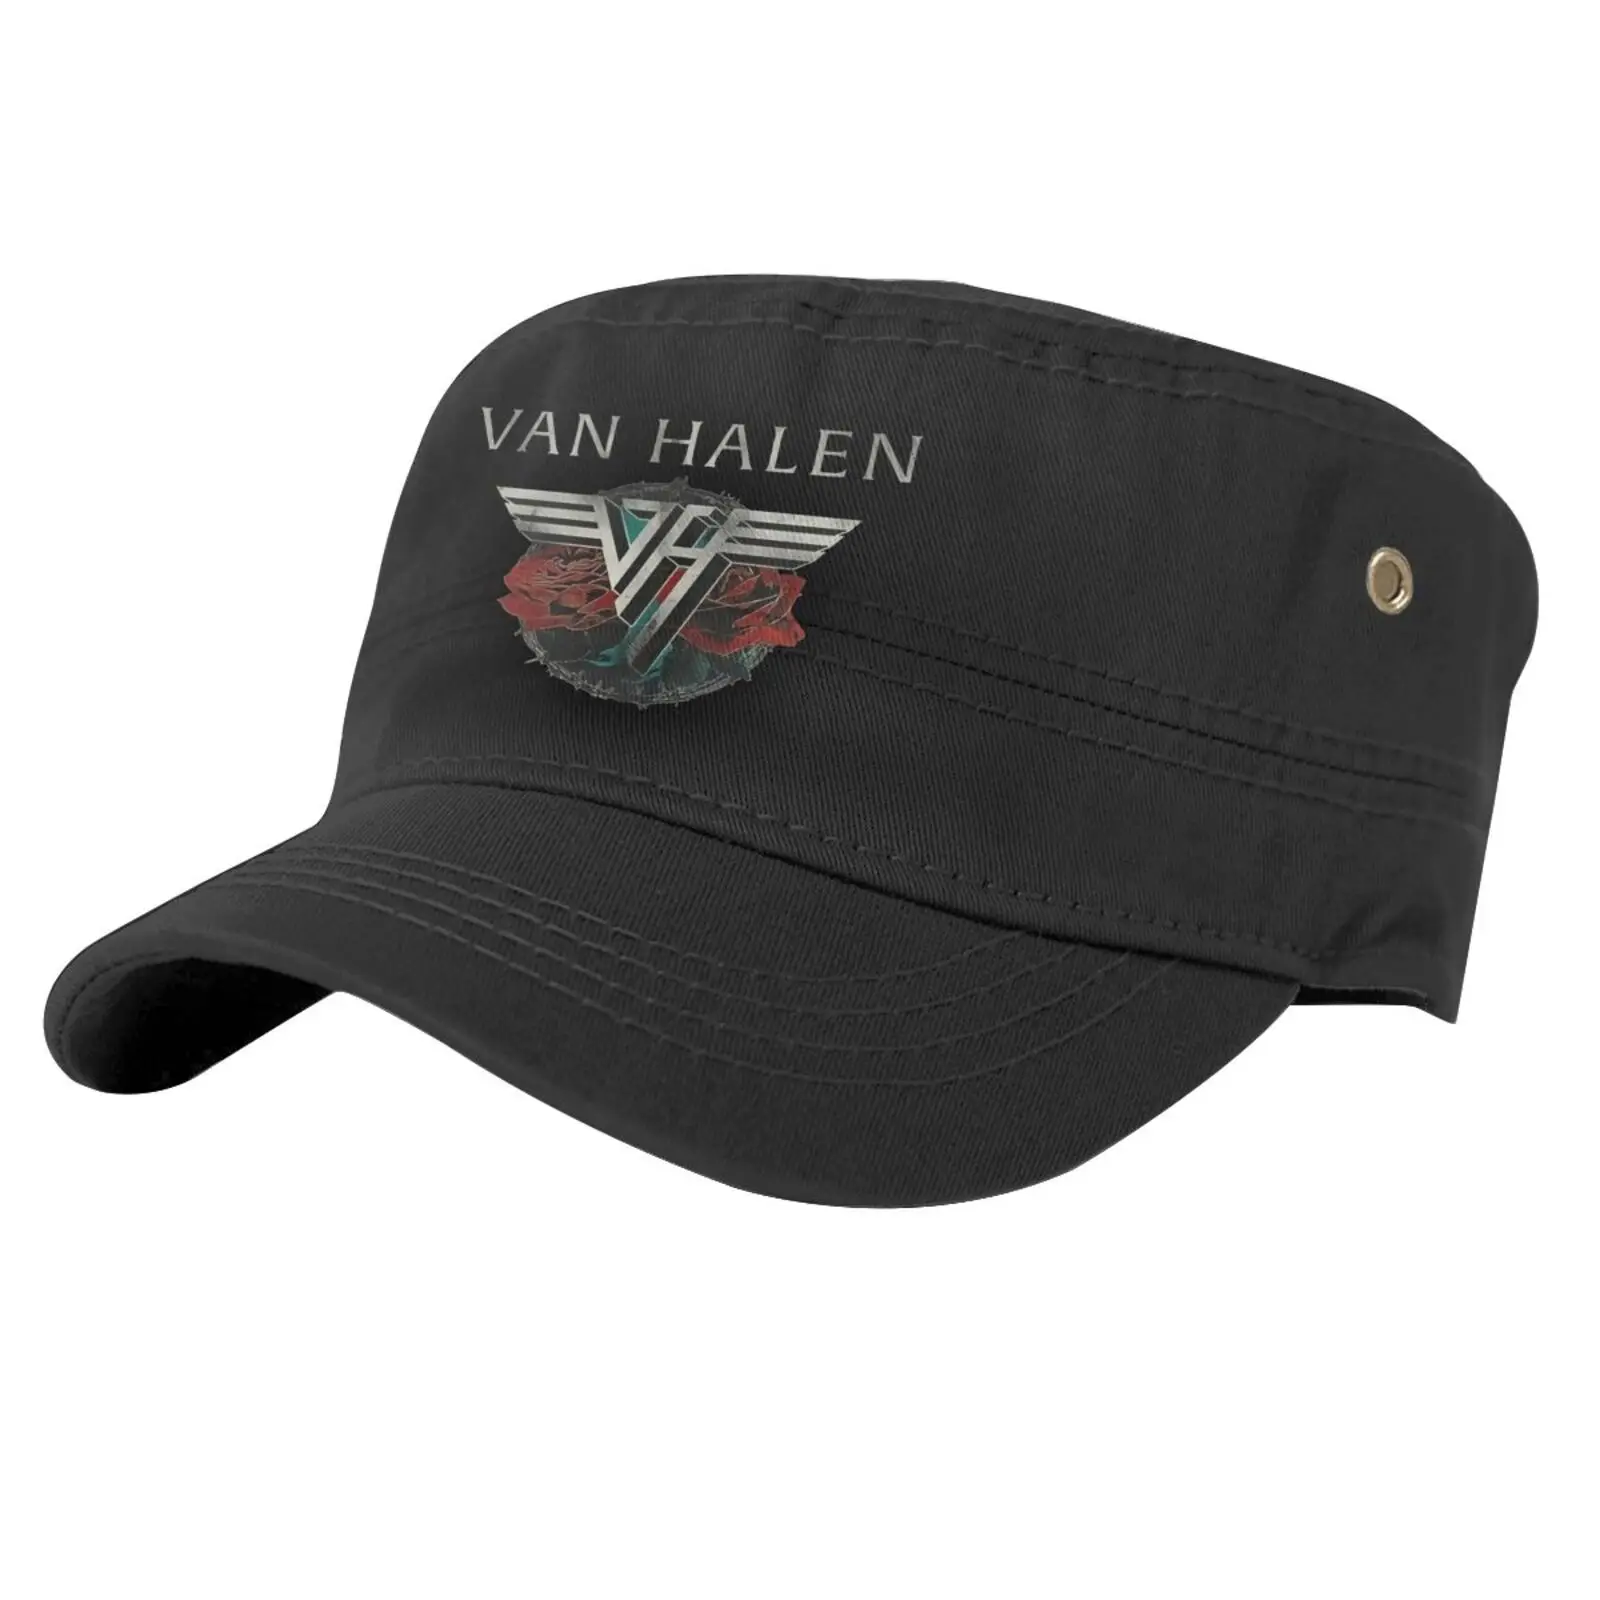 

Van Halen 1984 Tour Official Caps For Men Cap Male Hats For Men Winter Hat Women's Bucket Hat Trucker Cap Hats Knit Hat Cowboy